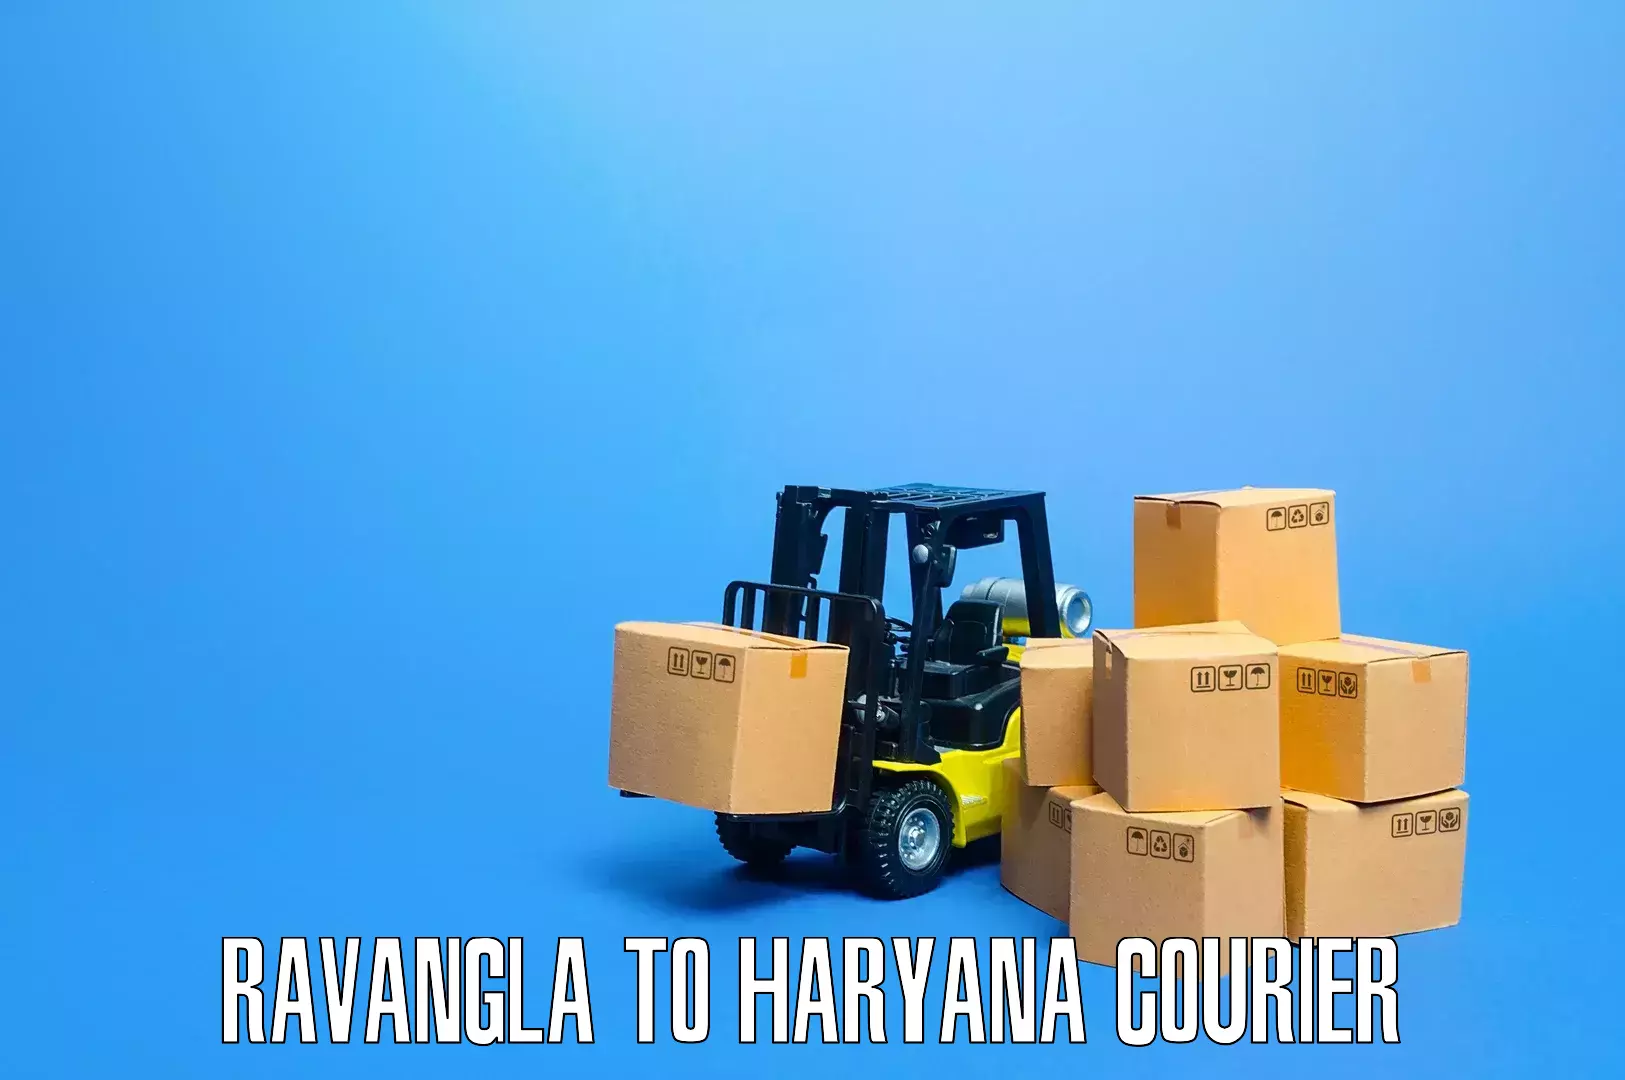 Professional moving company in Ravangla to Barwala